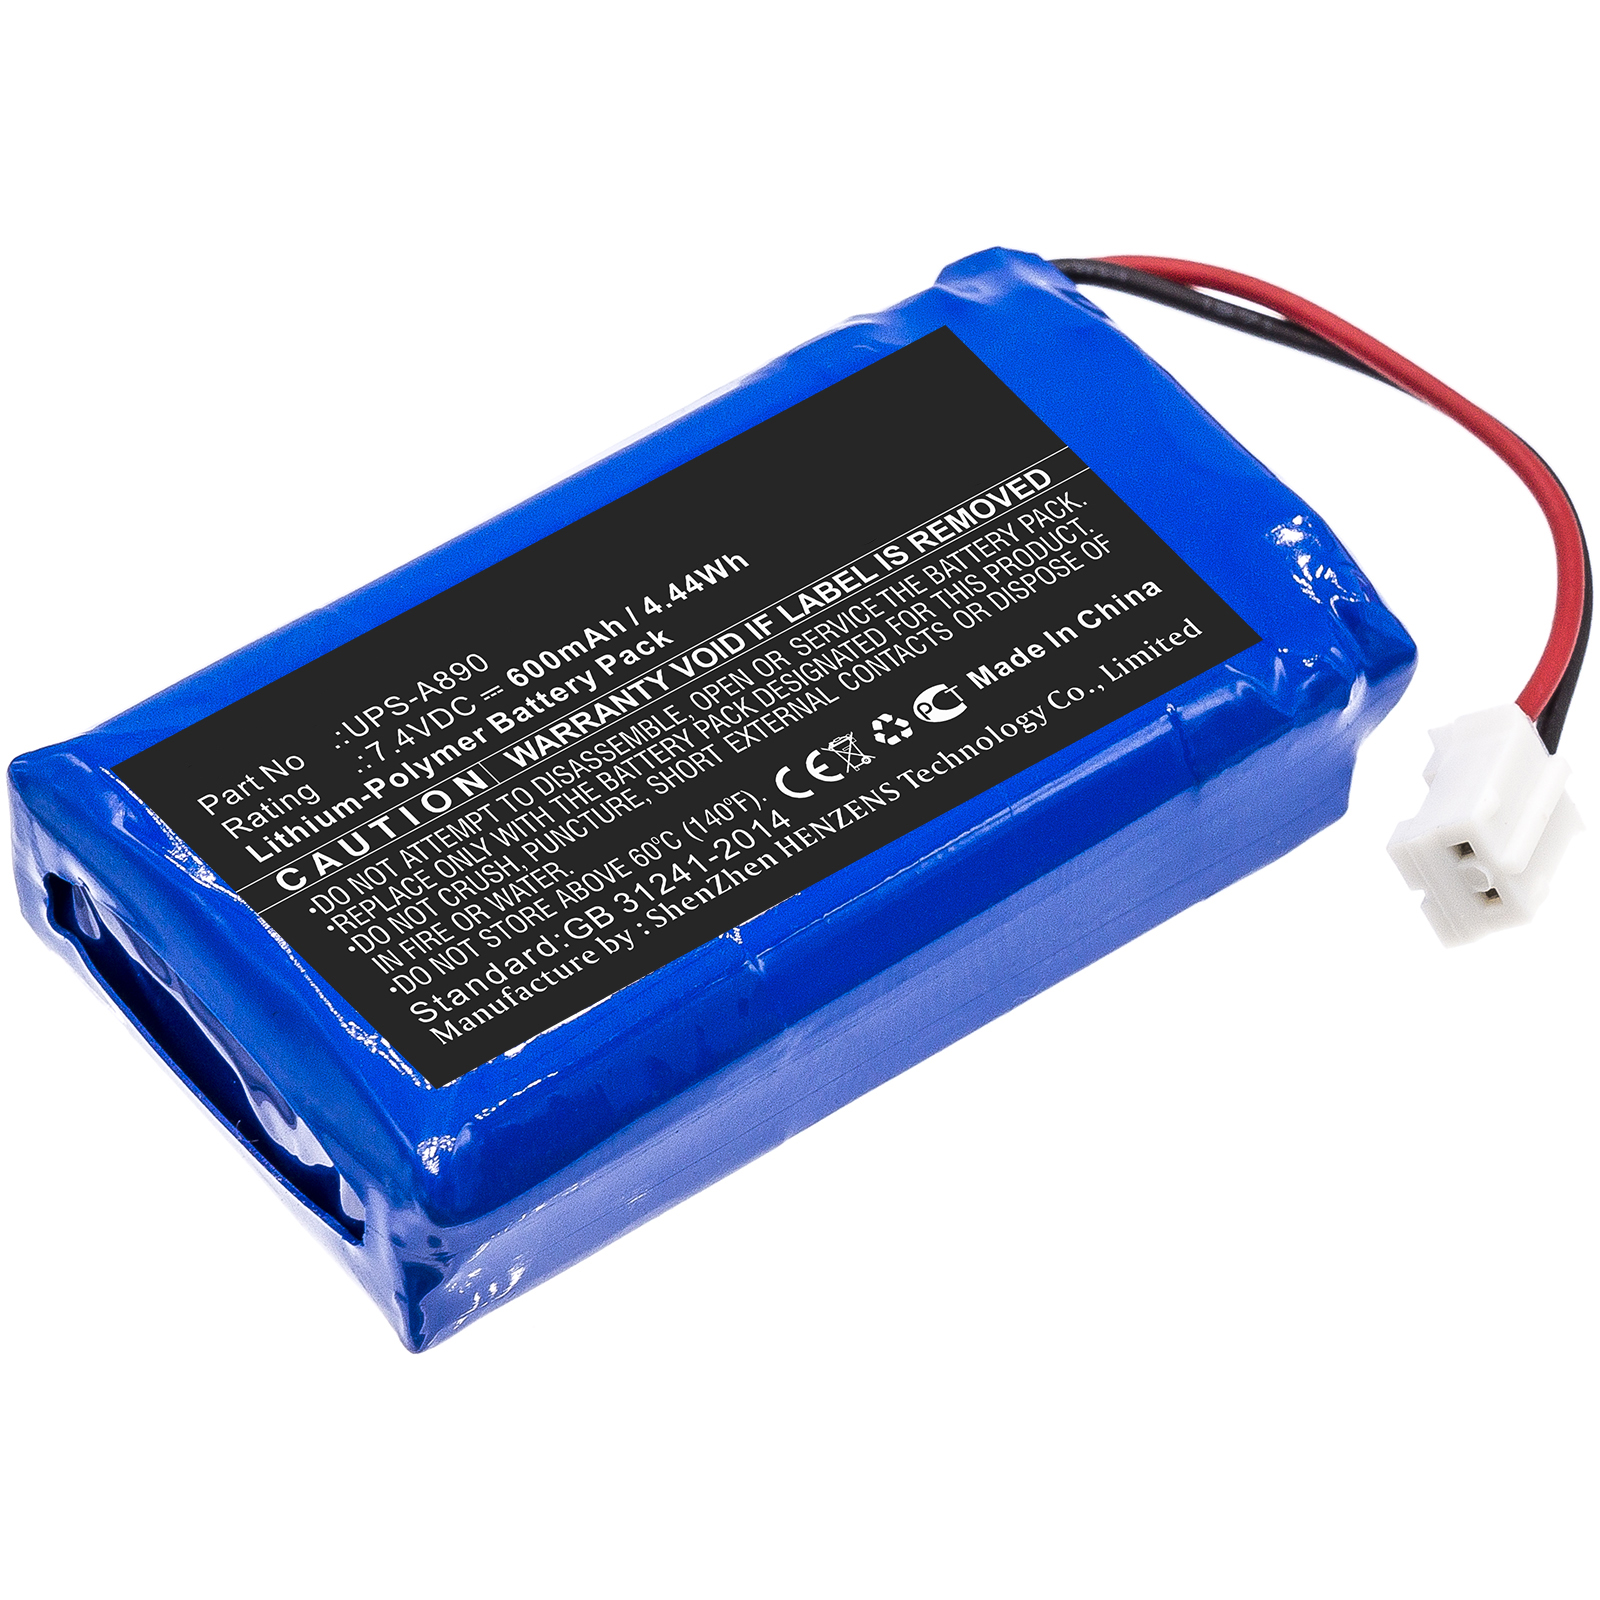 Synergy Digital Alarm System Battery, Compatible with Chuango UPS-A890 Alarm System Battery (7.4V, Li-Pol, 600mAh)